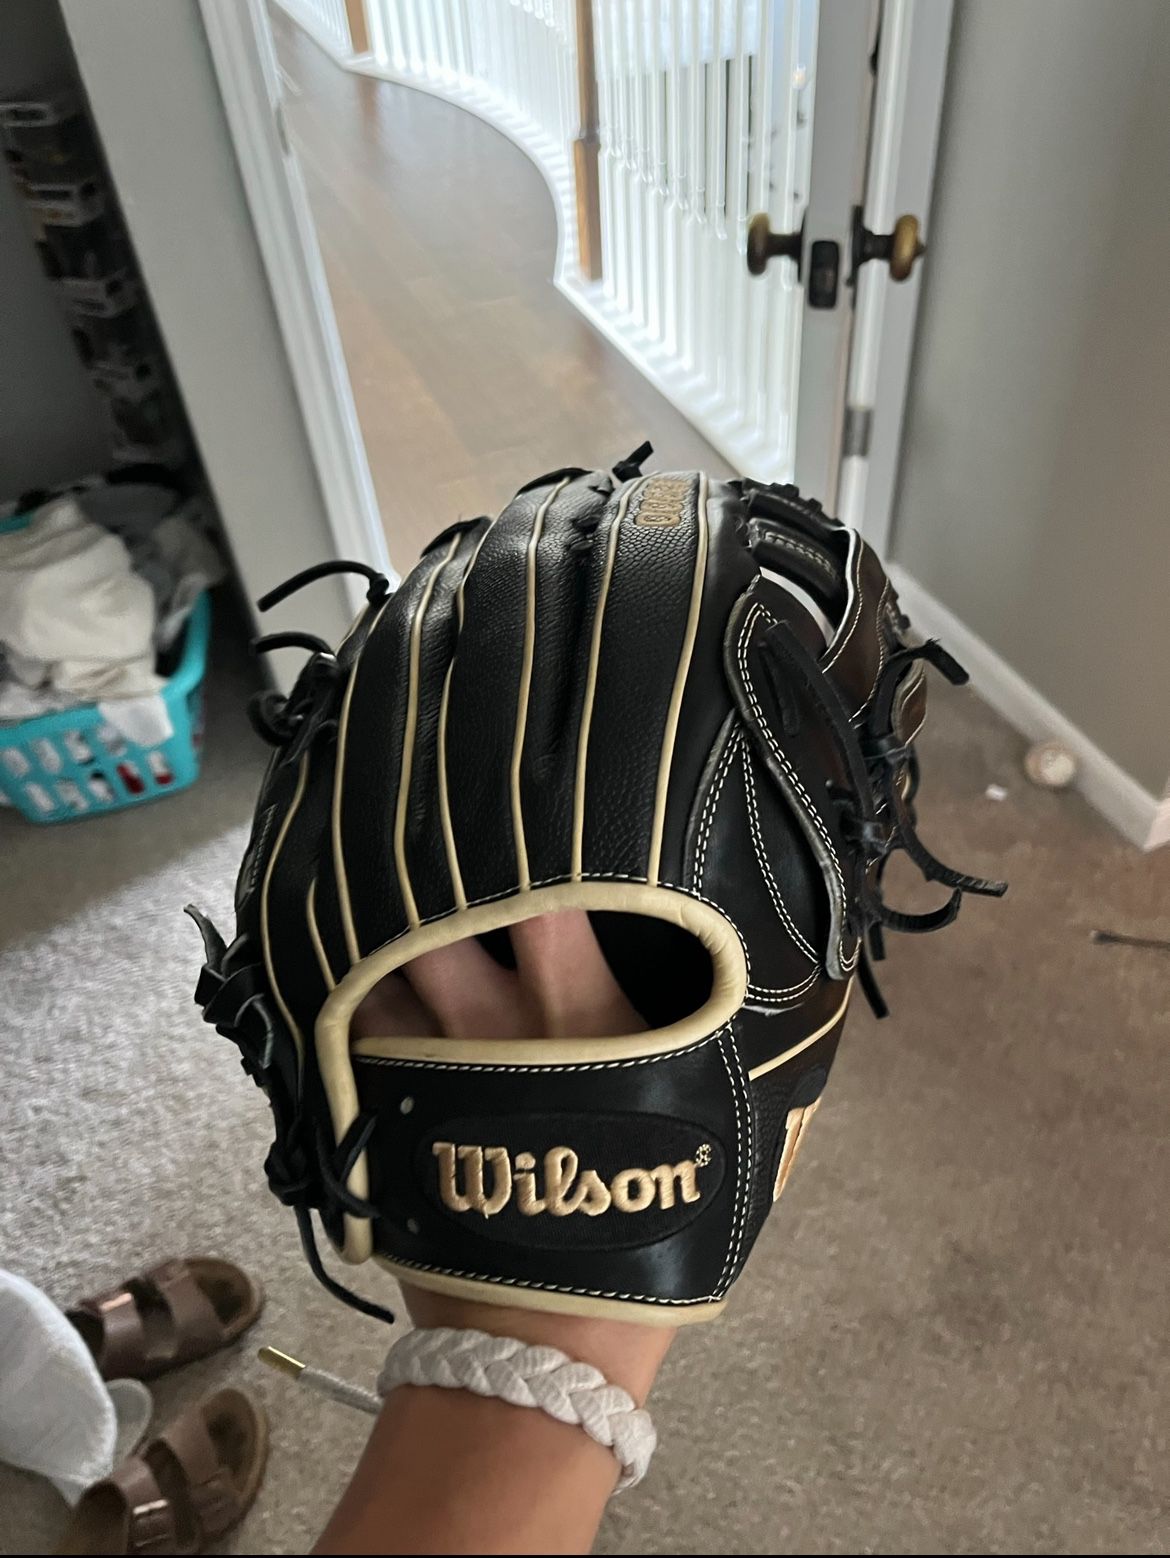 Wilson a2000 glove brand new $140 OBO